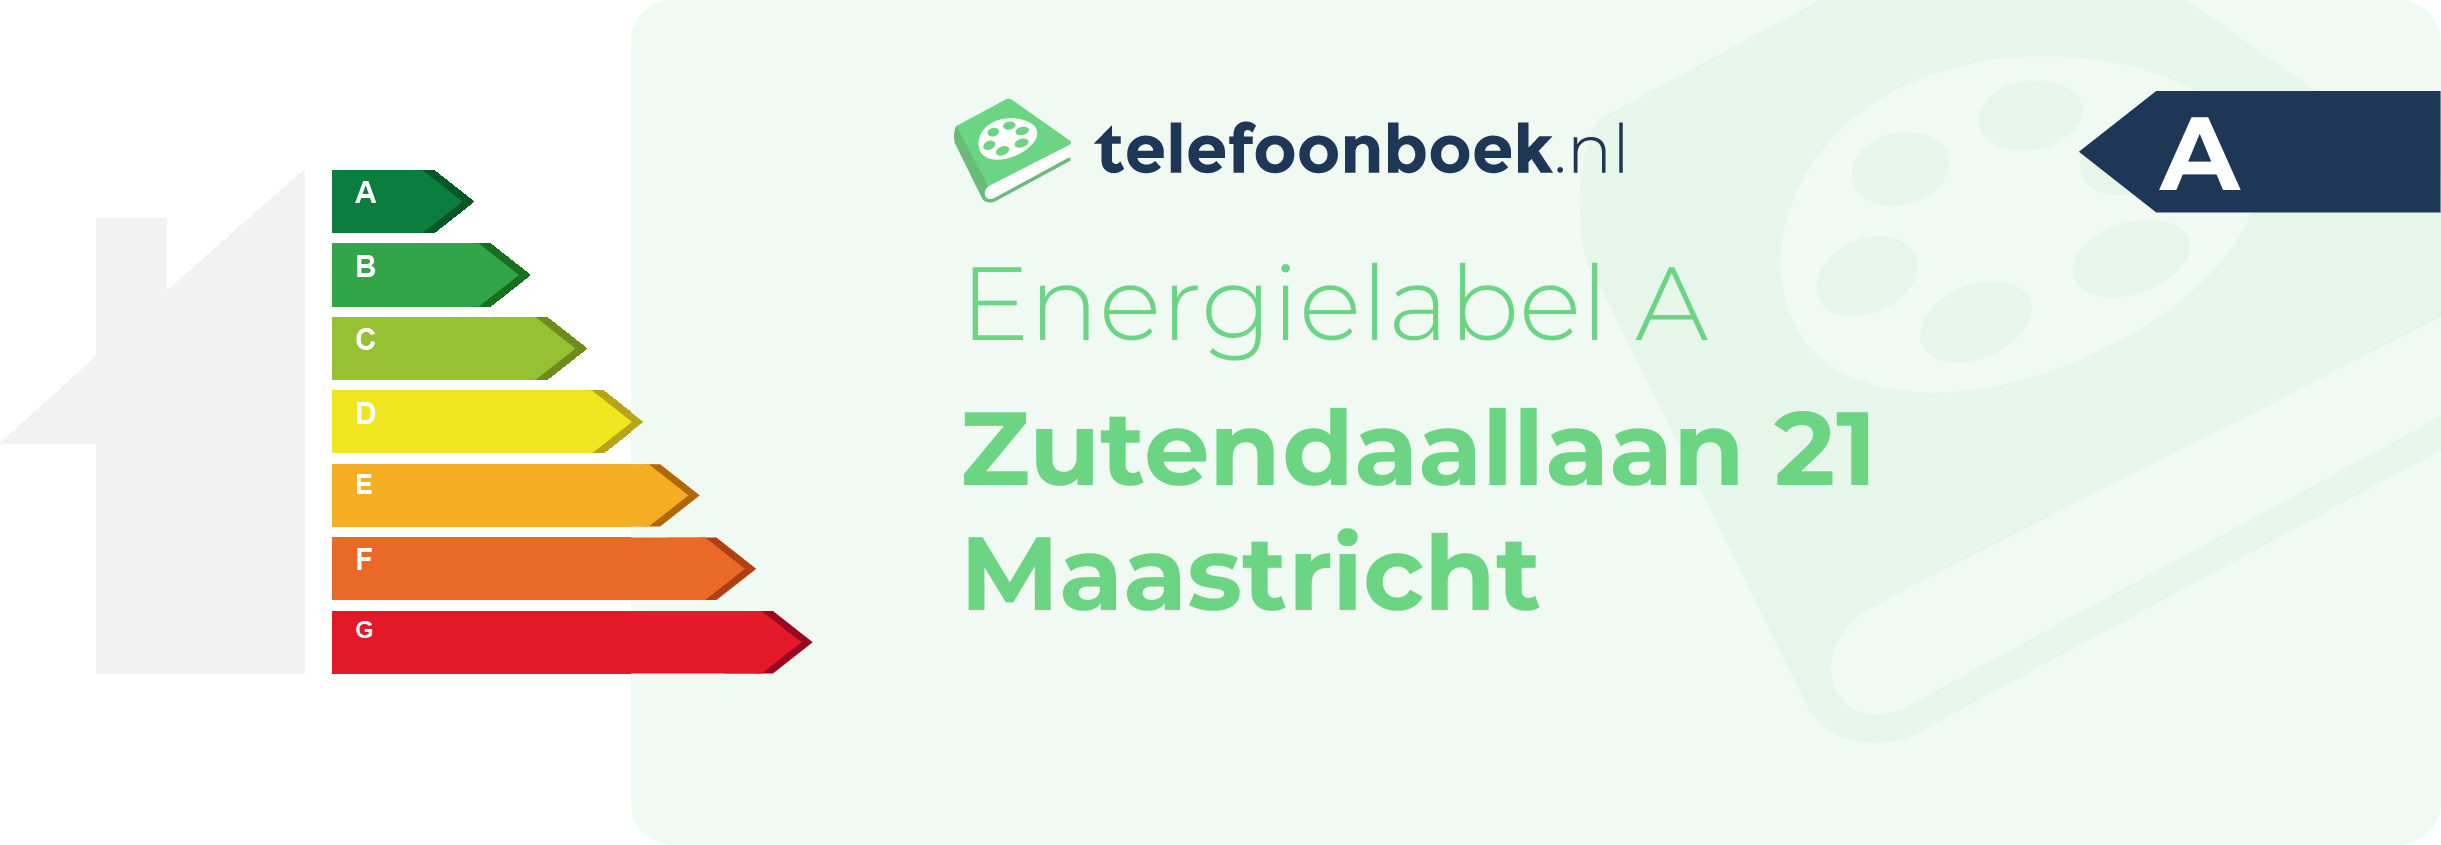 Energielabel Zutendaallaan 21 Maastricht